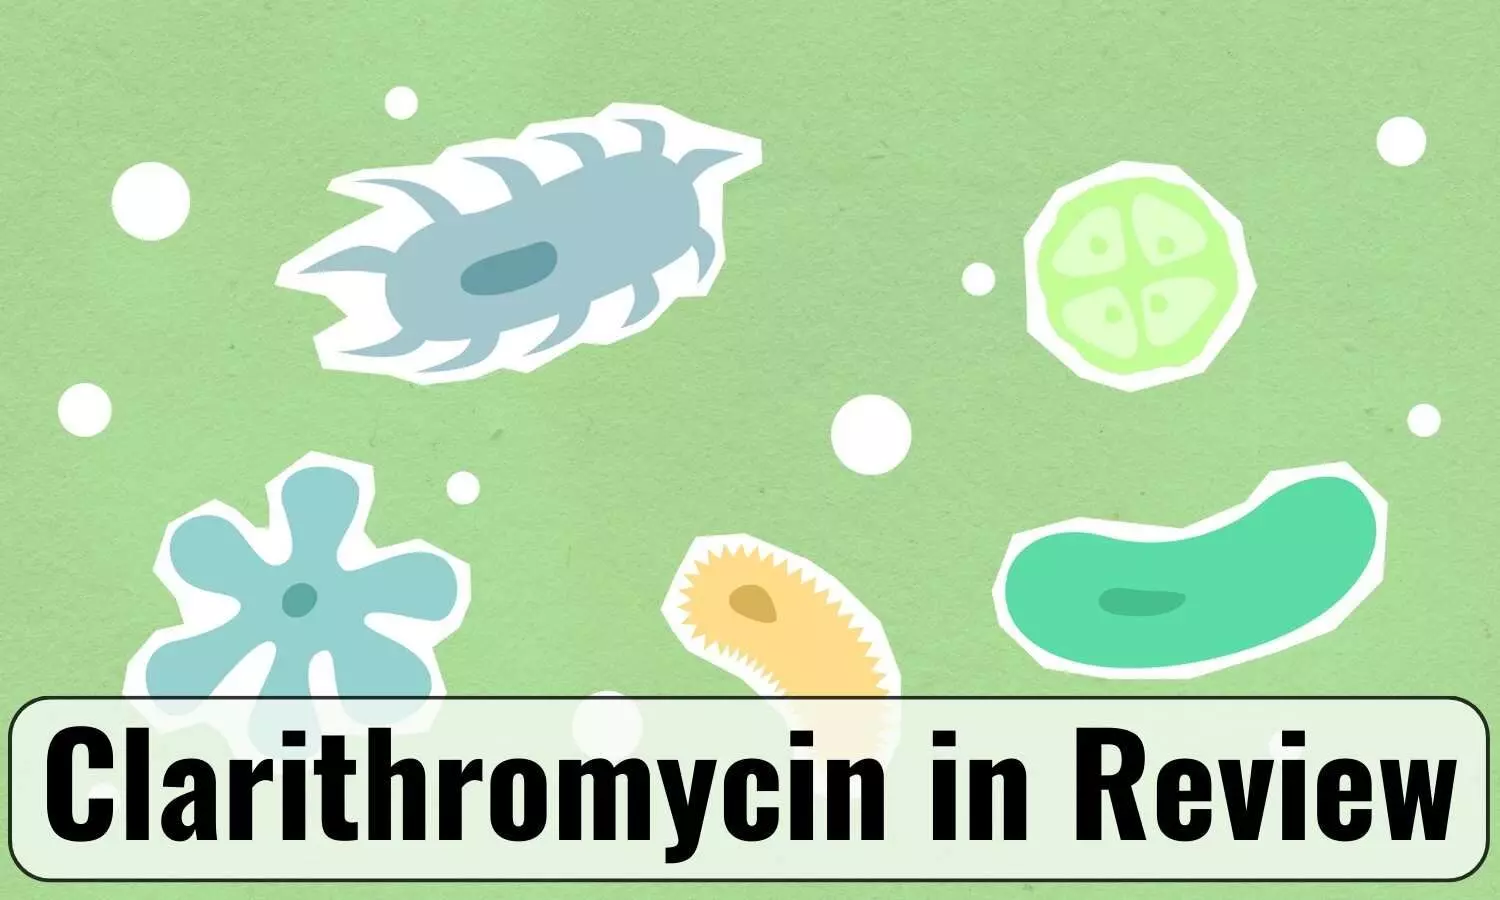 Clarithromycin-Quick Review of Its Unique Antibiotic Spectrum and Therapeutic Use